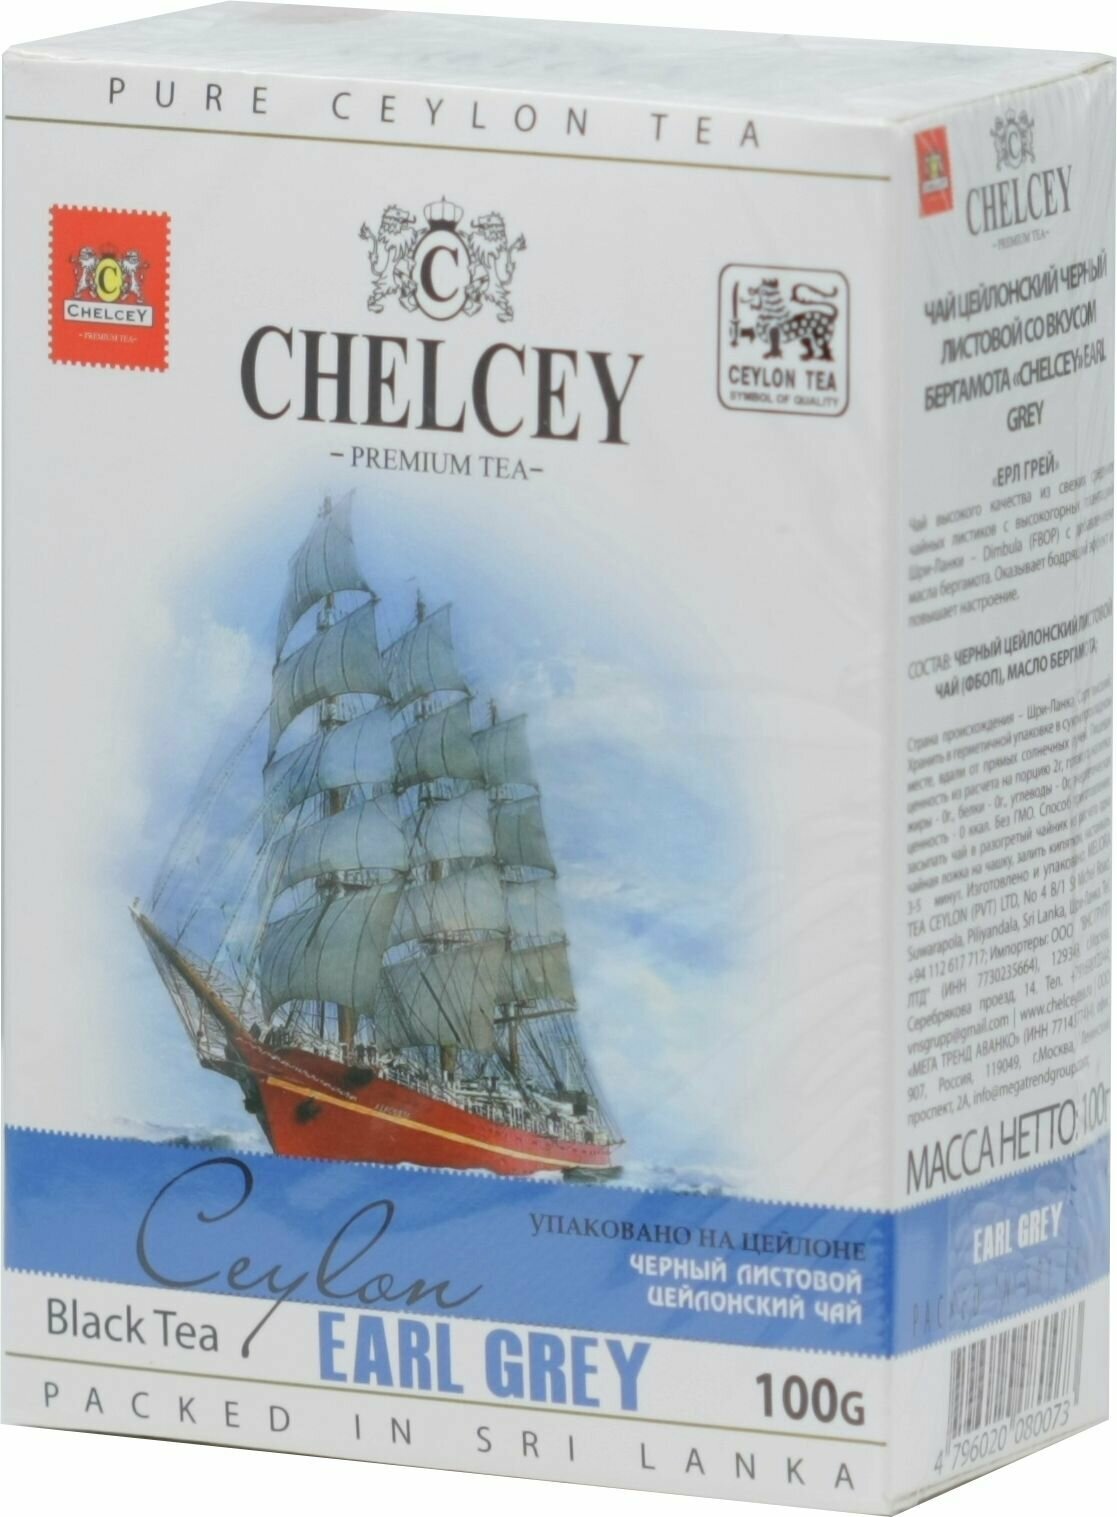 CHELCEY Чай EARL GREY черный листовой, 100 г